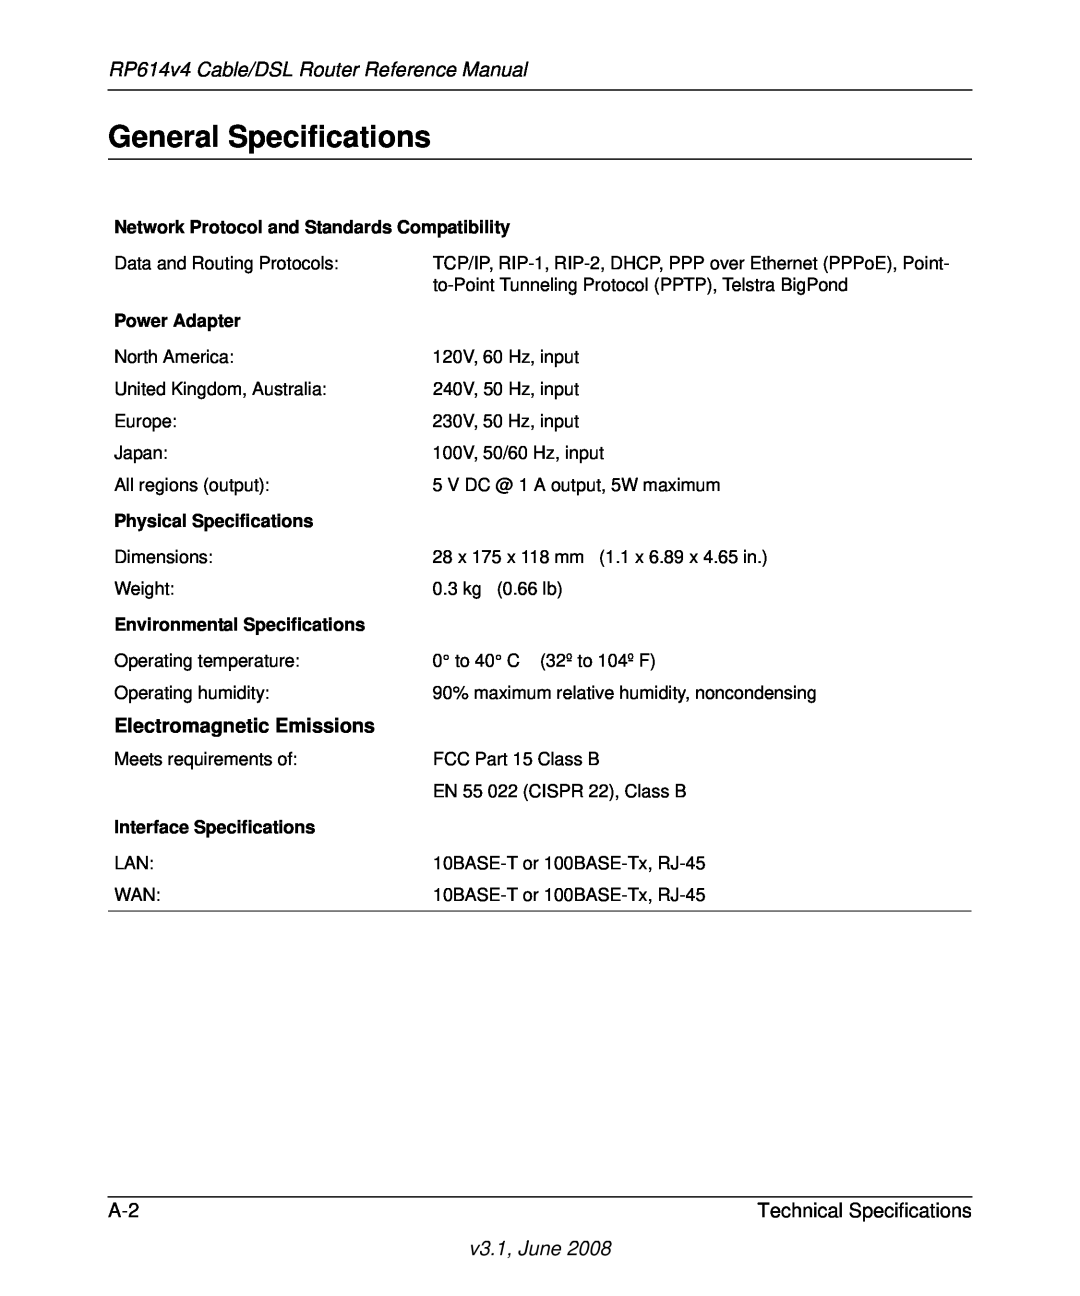 NETGEAR RP614 v4 General Specifications, RP614v4 Cable/DSL Router Reference Manual, Electromagnetic Emissions, v3.1, June 